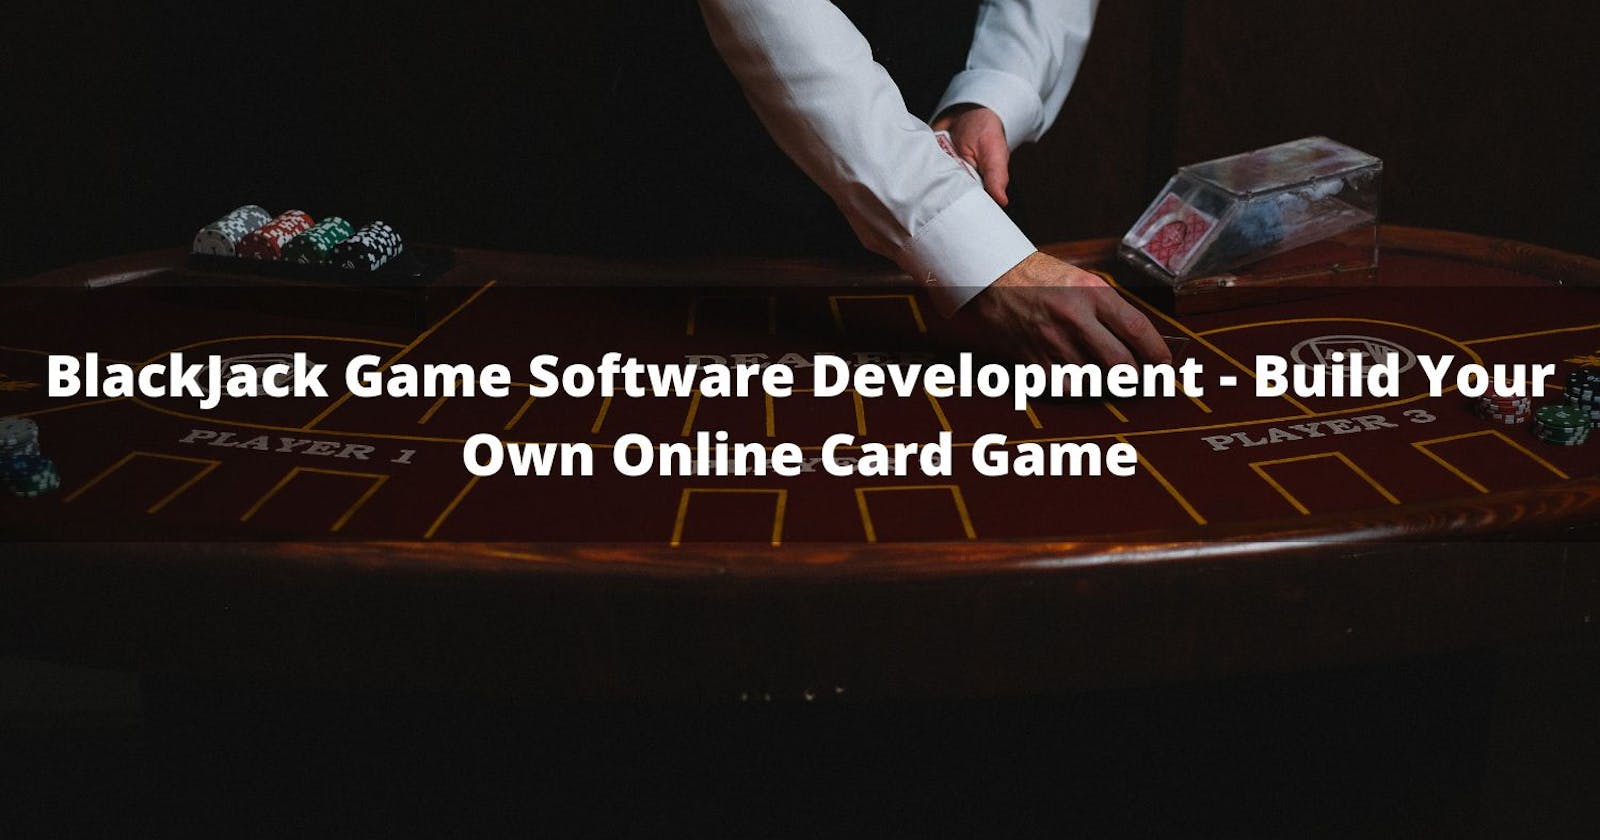 BlackJack Game Software Development - Build Your Own Online Card Game